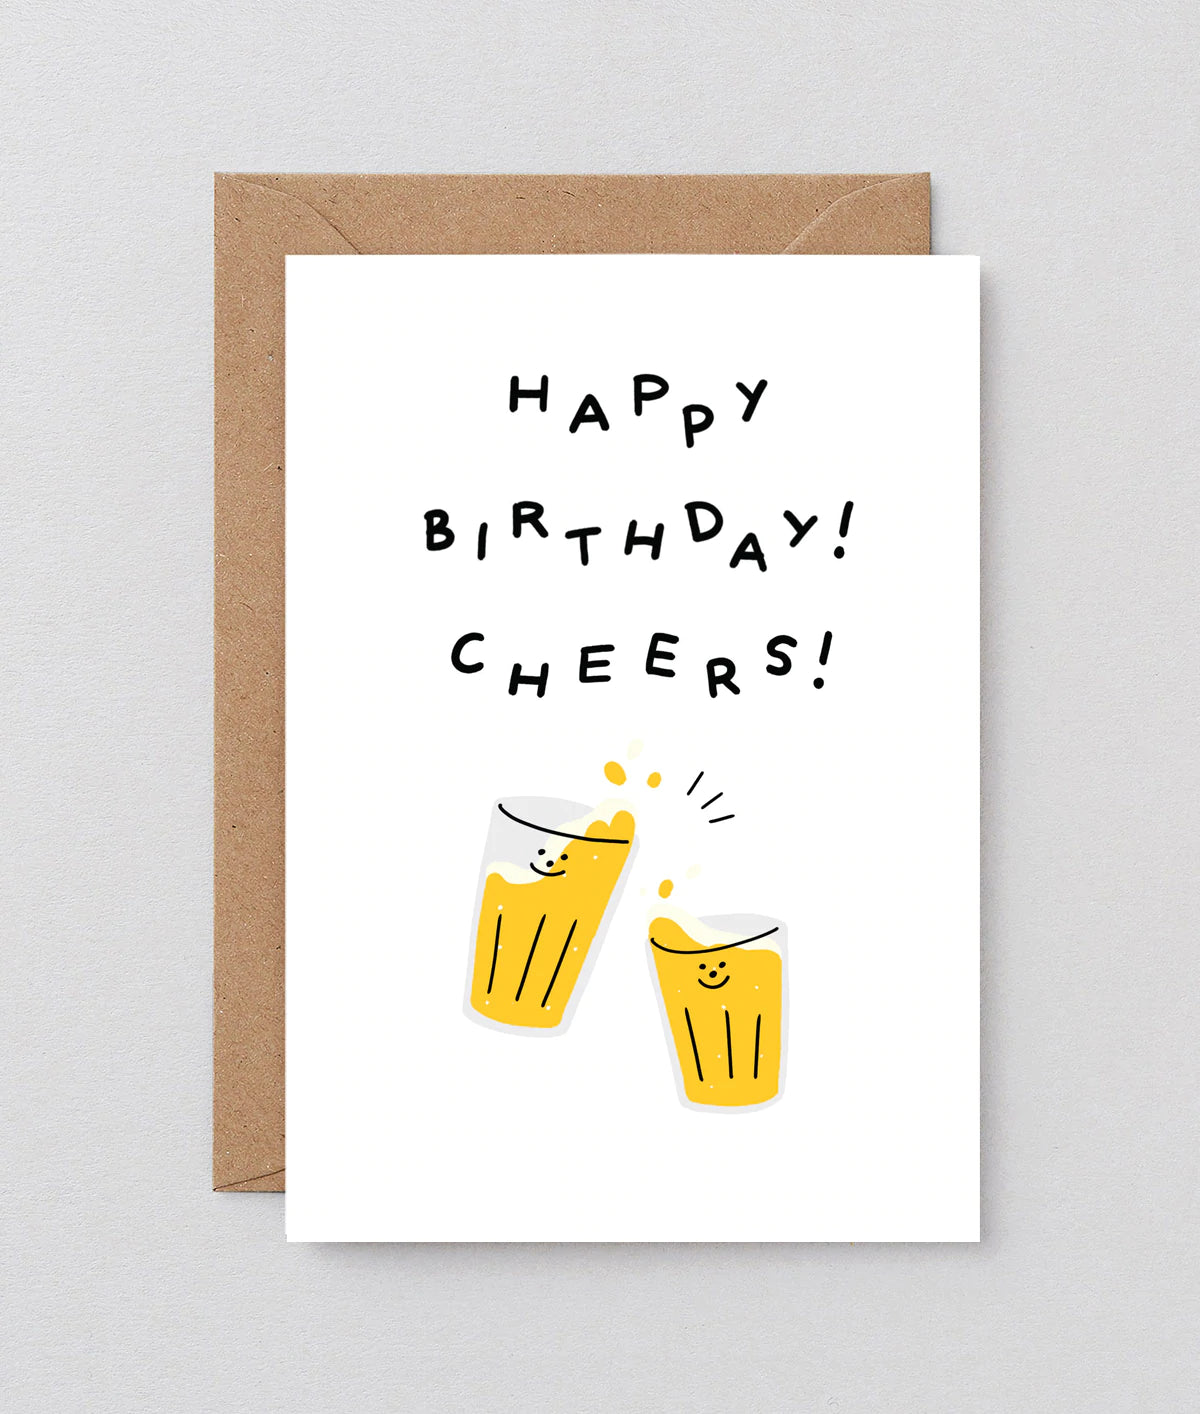 Cheers! Birthday Card